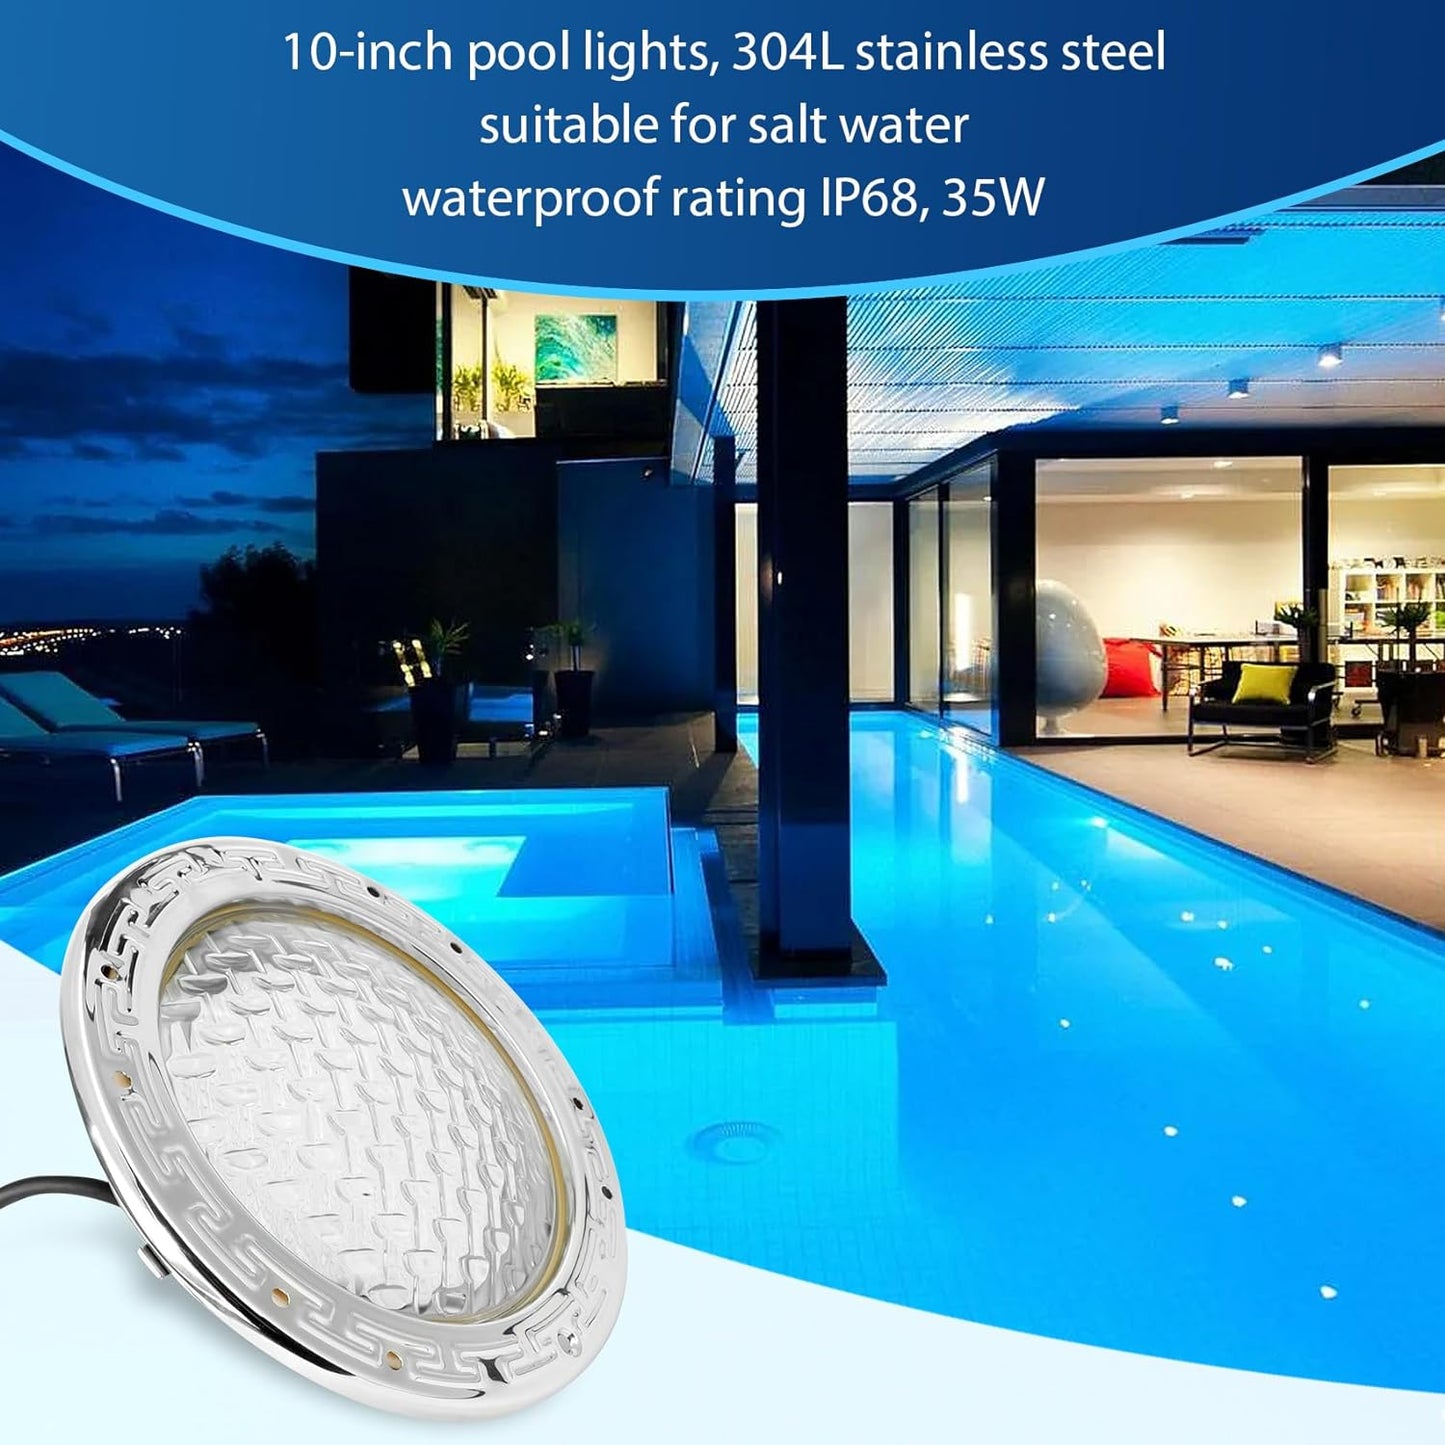 SH101100 5G LED RGBW 10 in 12VAC Pool Lights for Inground Pool, Led Lights for Inground Pool with 50 Foot Cord for 10 inch Wet Ni